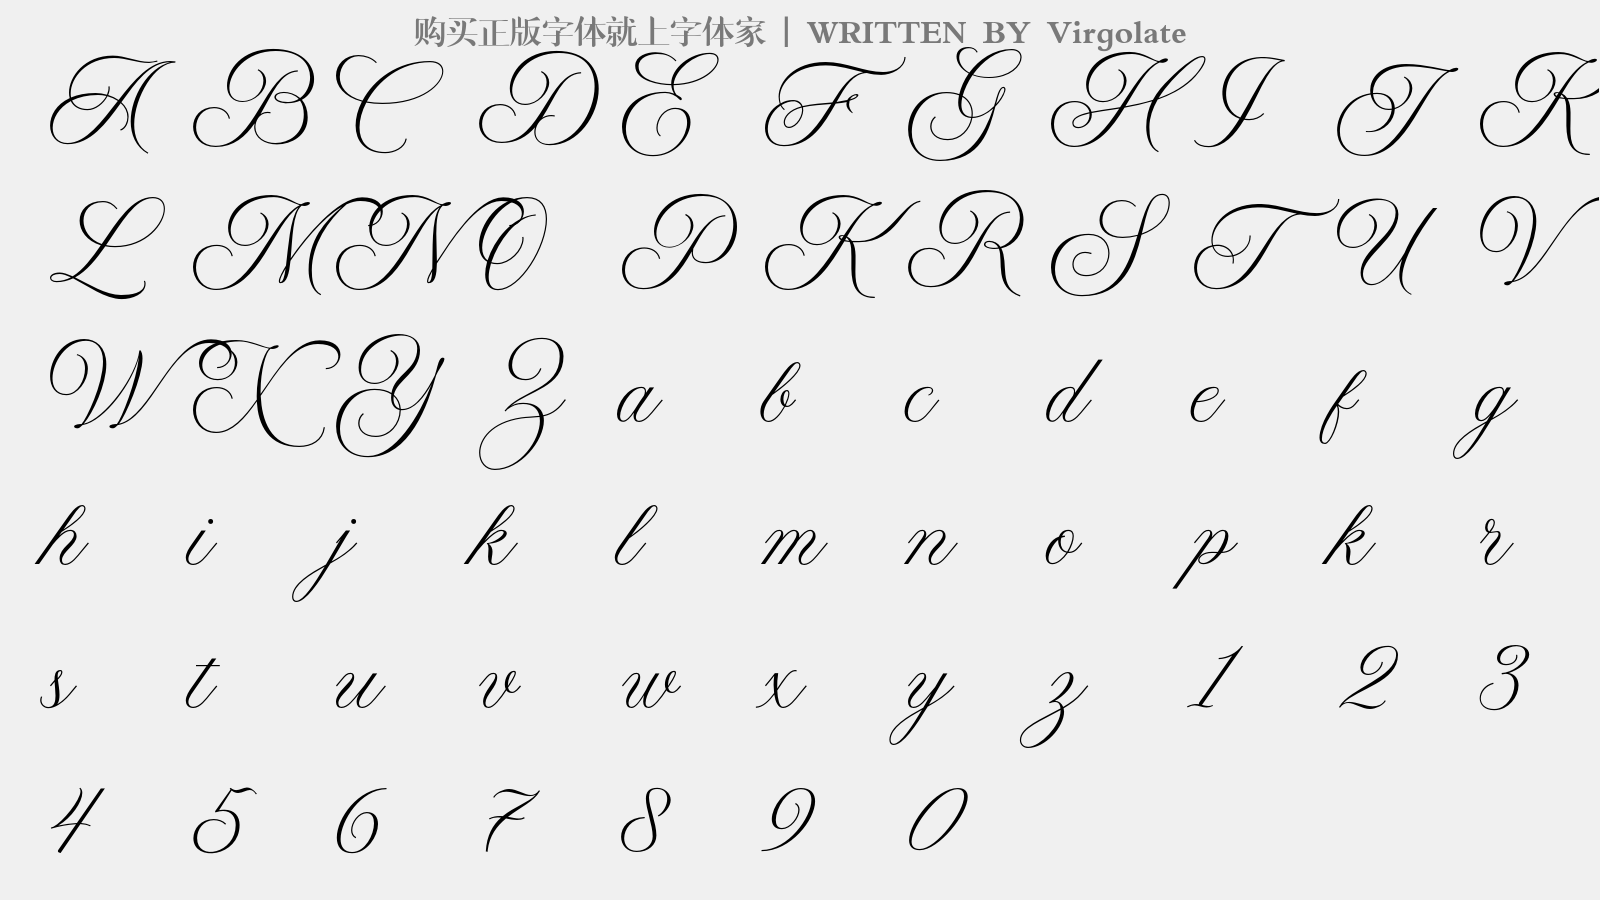 Virgolate - 大写字母/小写字母/数字